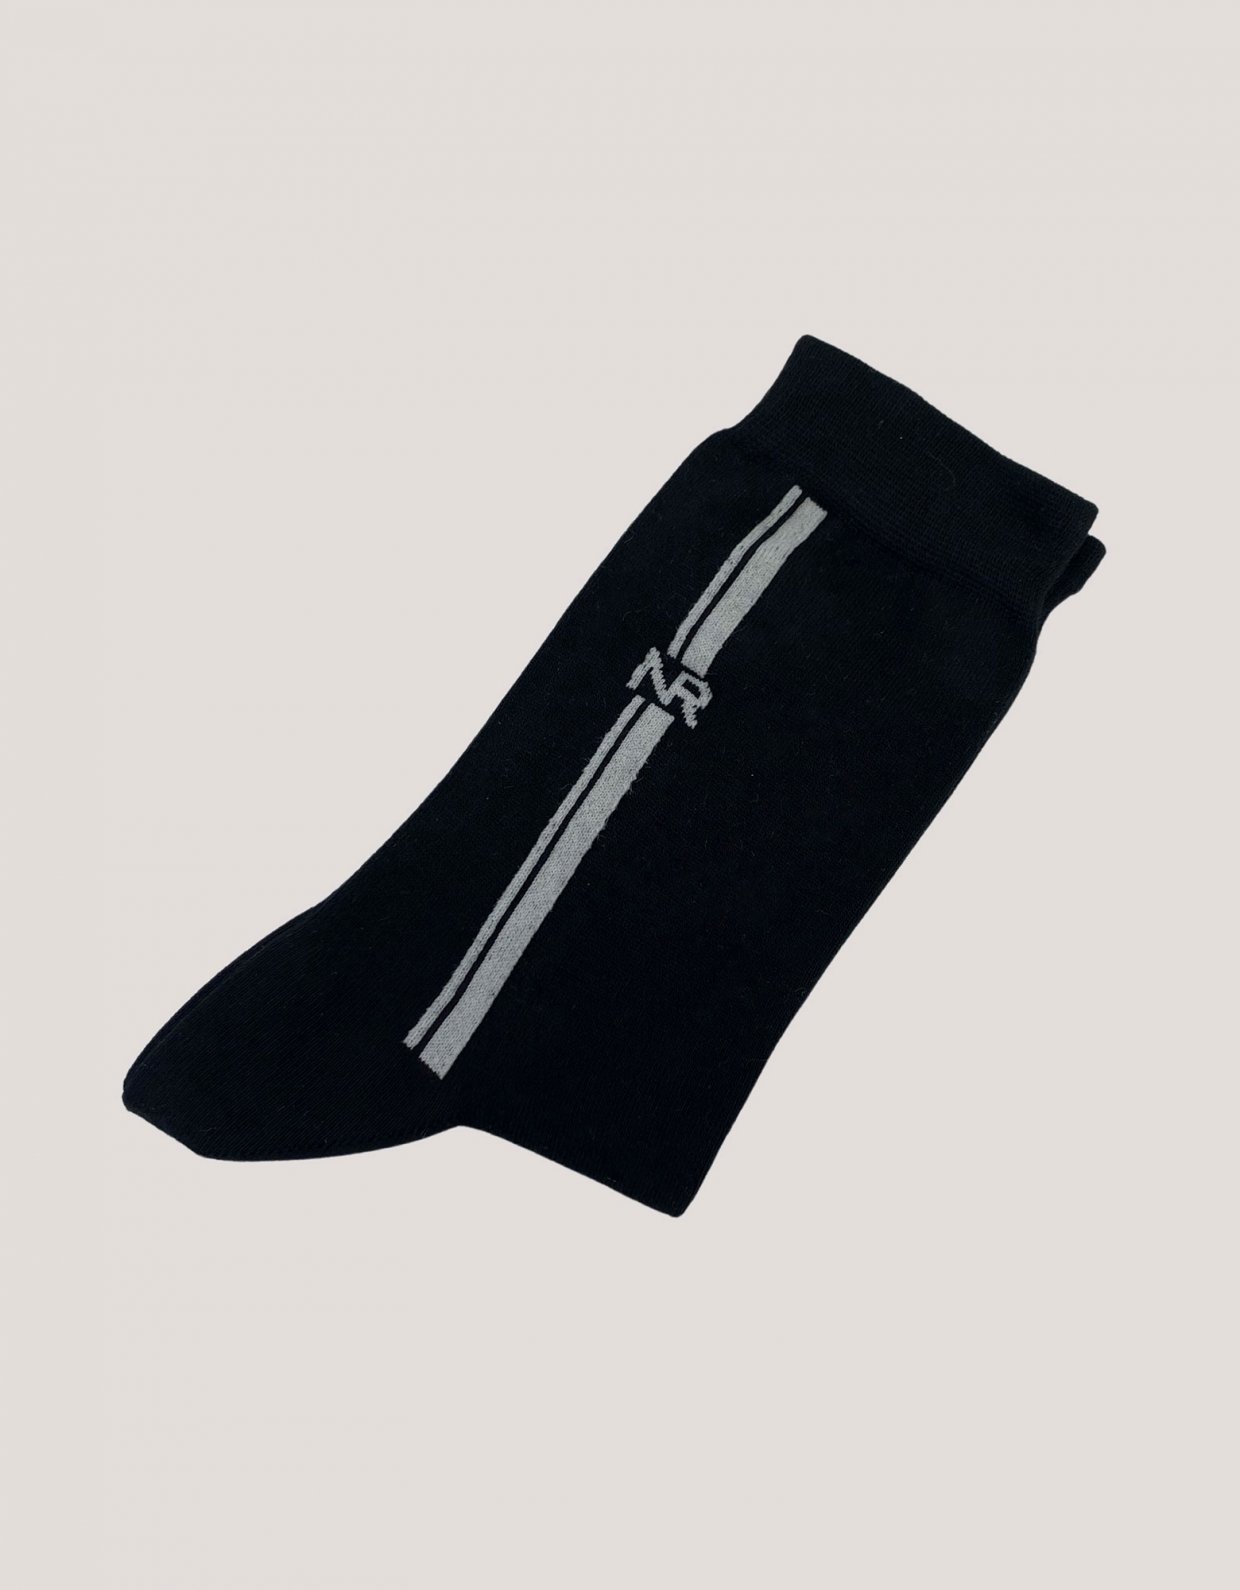 Nadia Rapti Lines n logo socks black